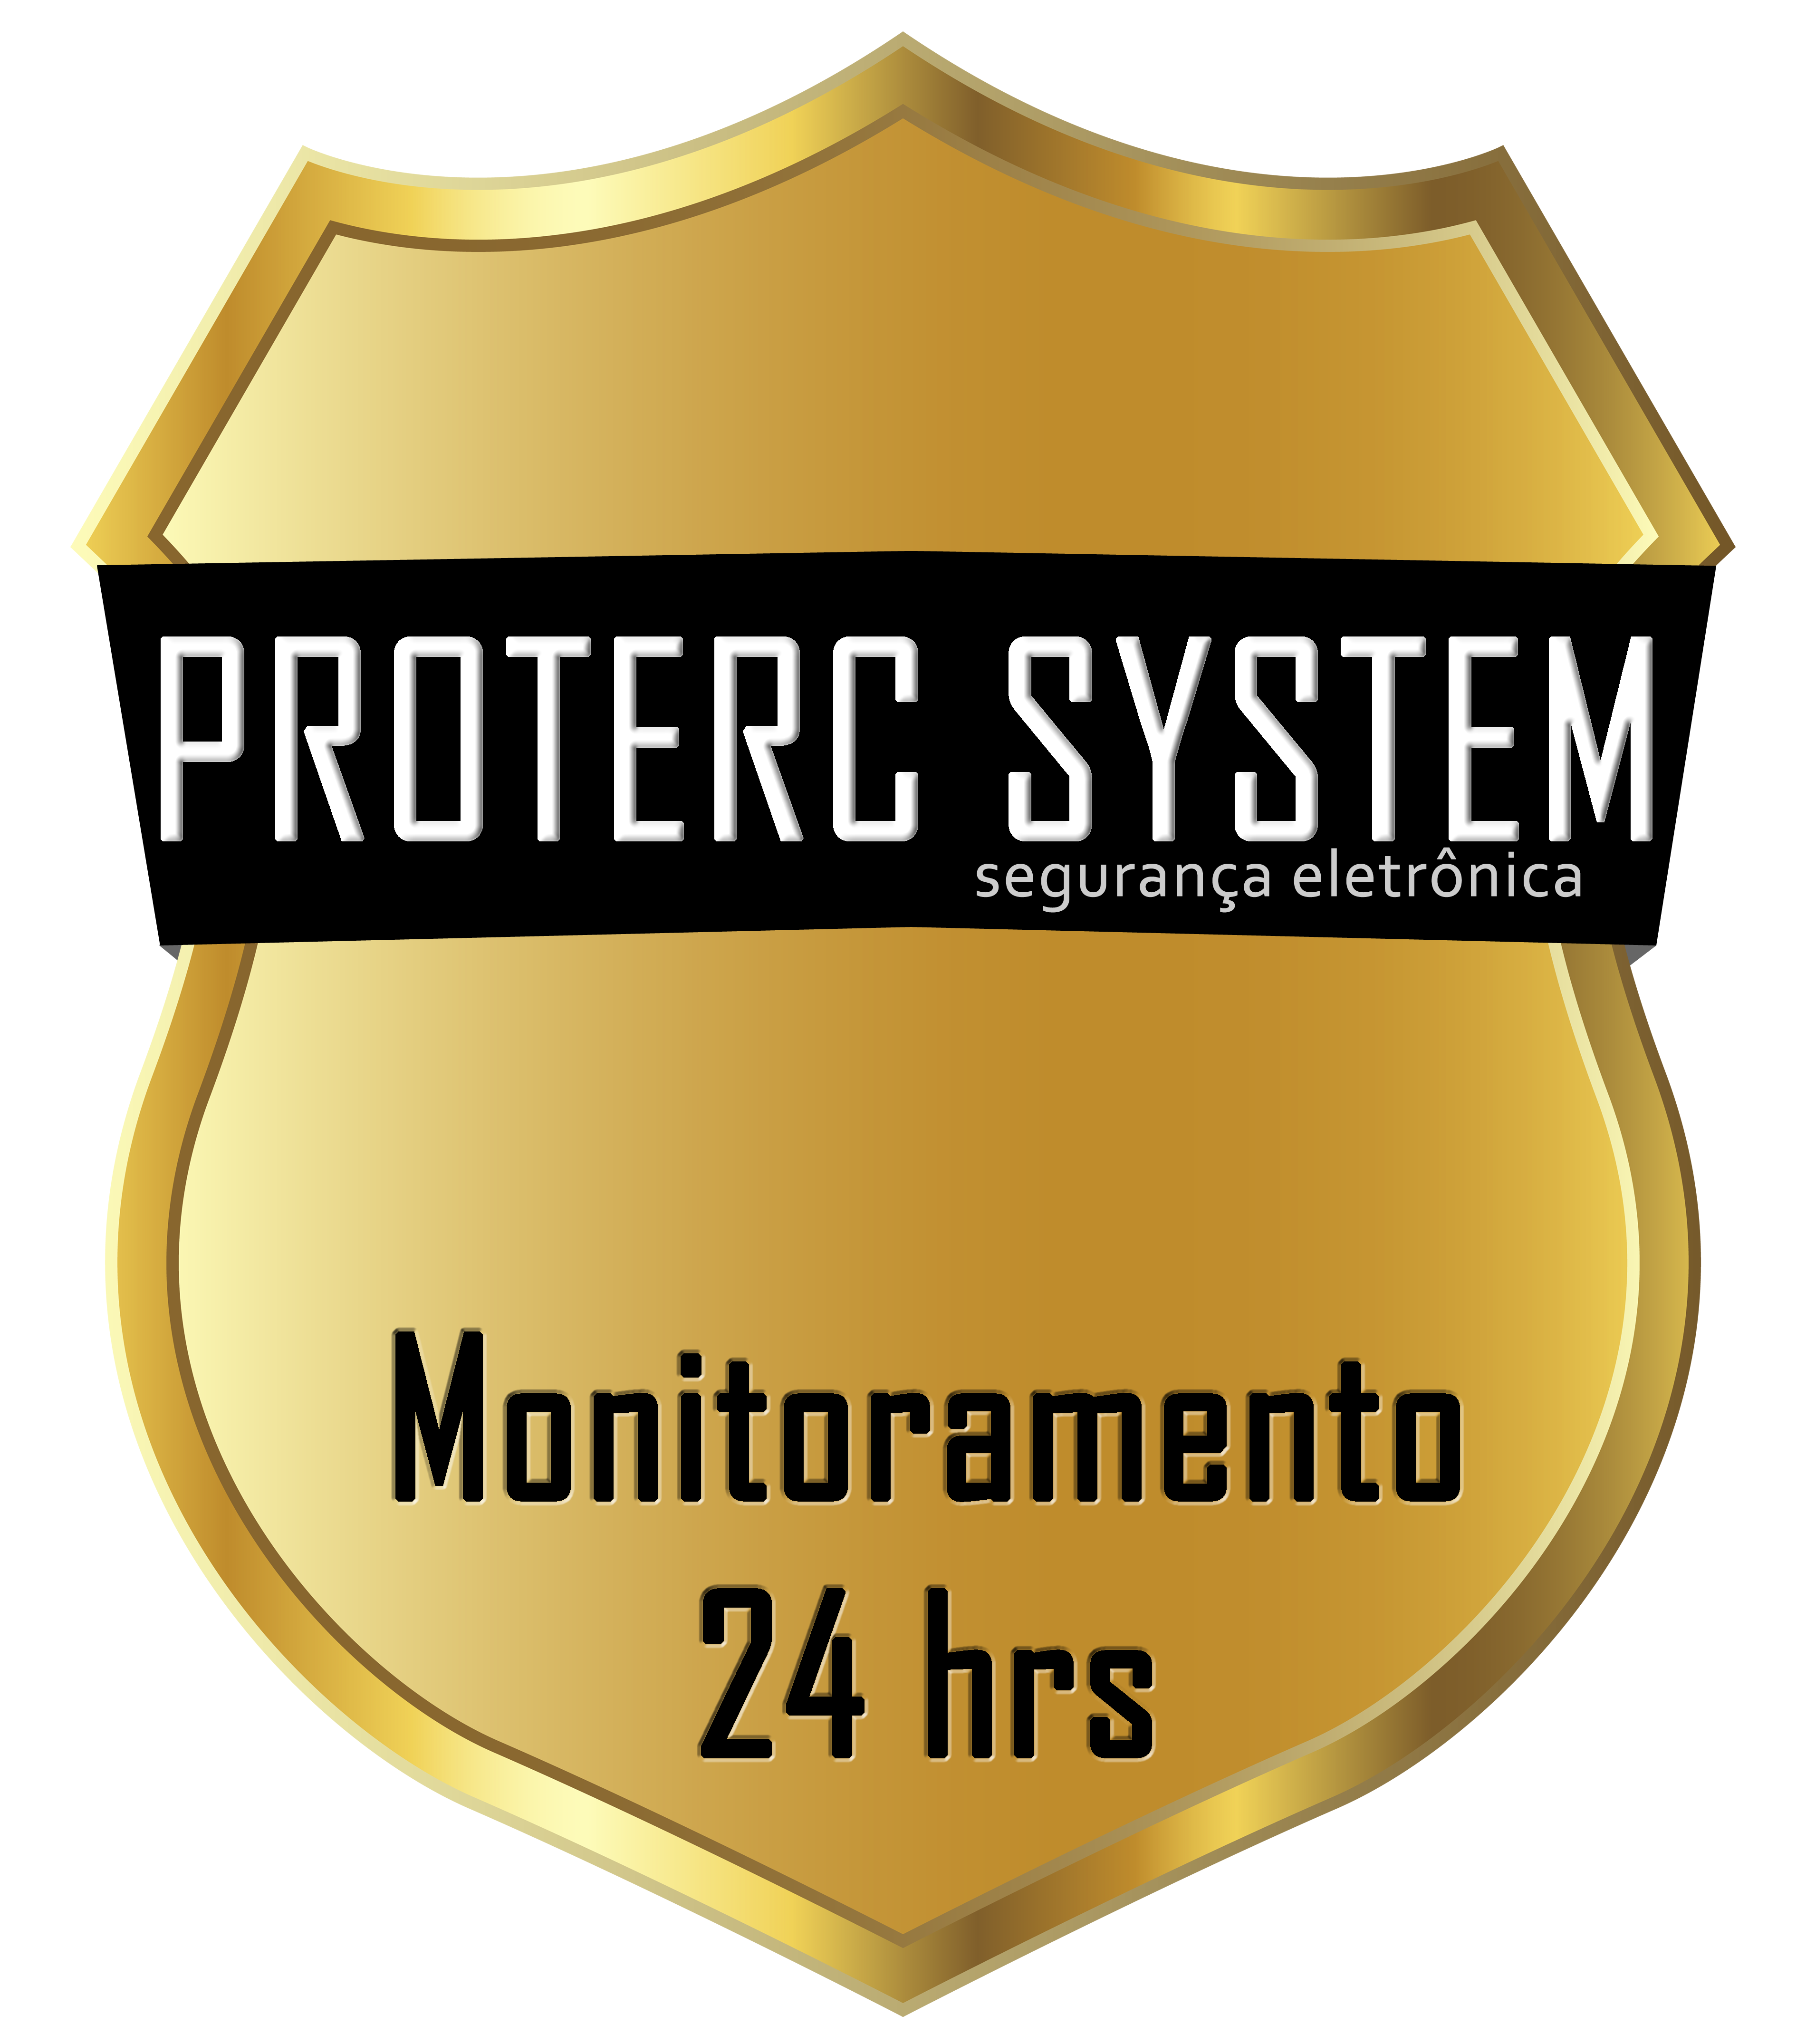 Proterc System